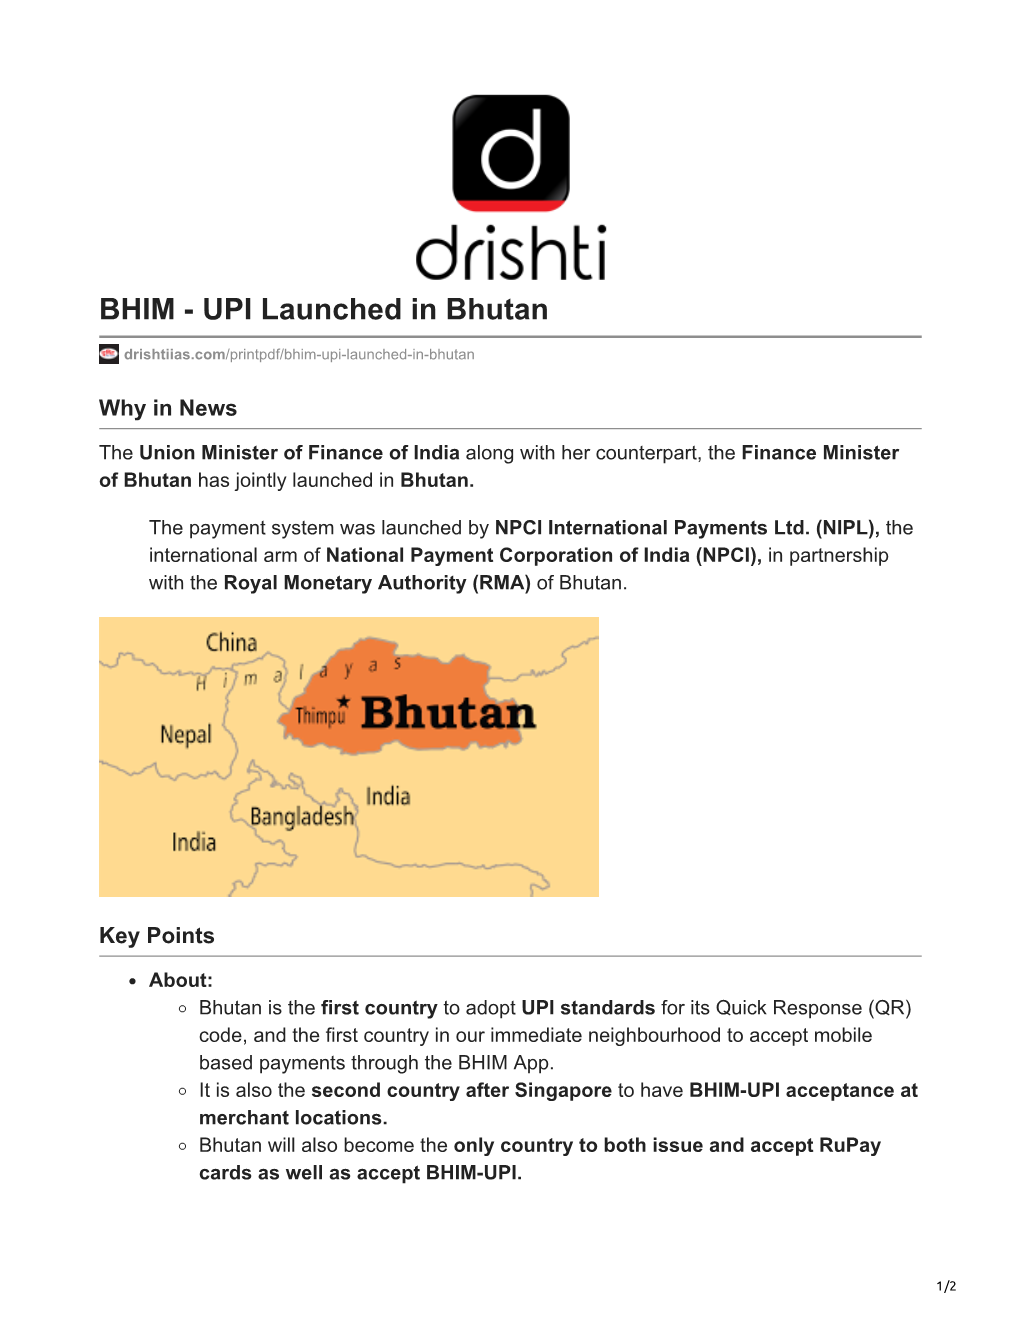 BHIM - UPI Launched in Bhutan